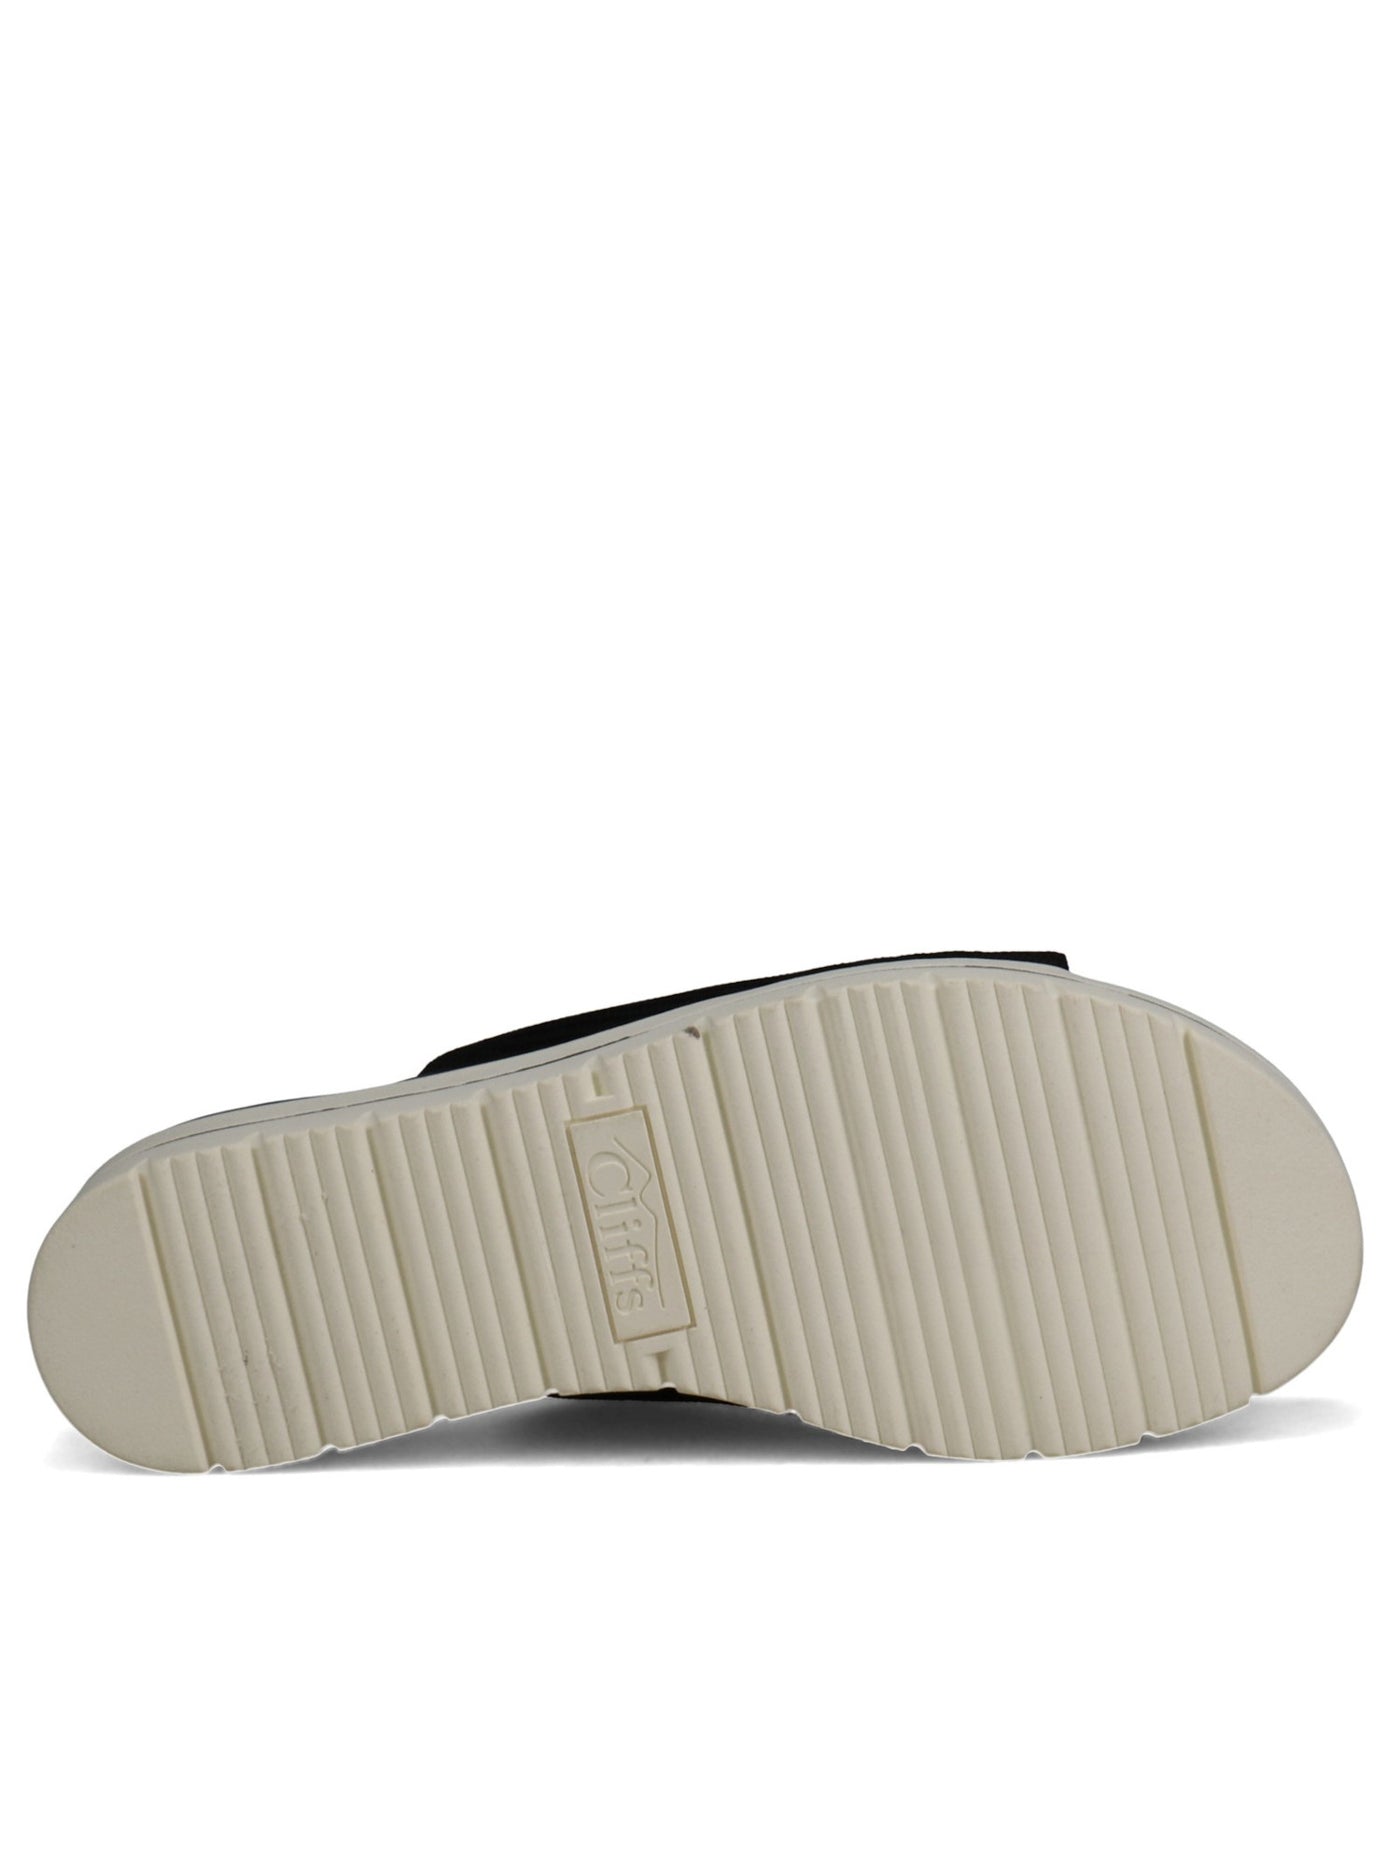 CLIFFS BY WHITE MOUNTAIN Womens Black 1" Platform Comfort Typhoon Round Toe Wedge Slip On Slide Sandals Shoes M